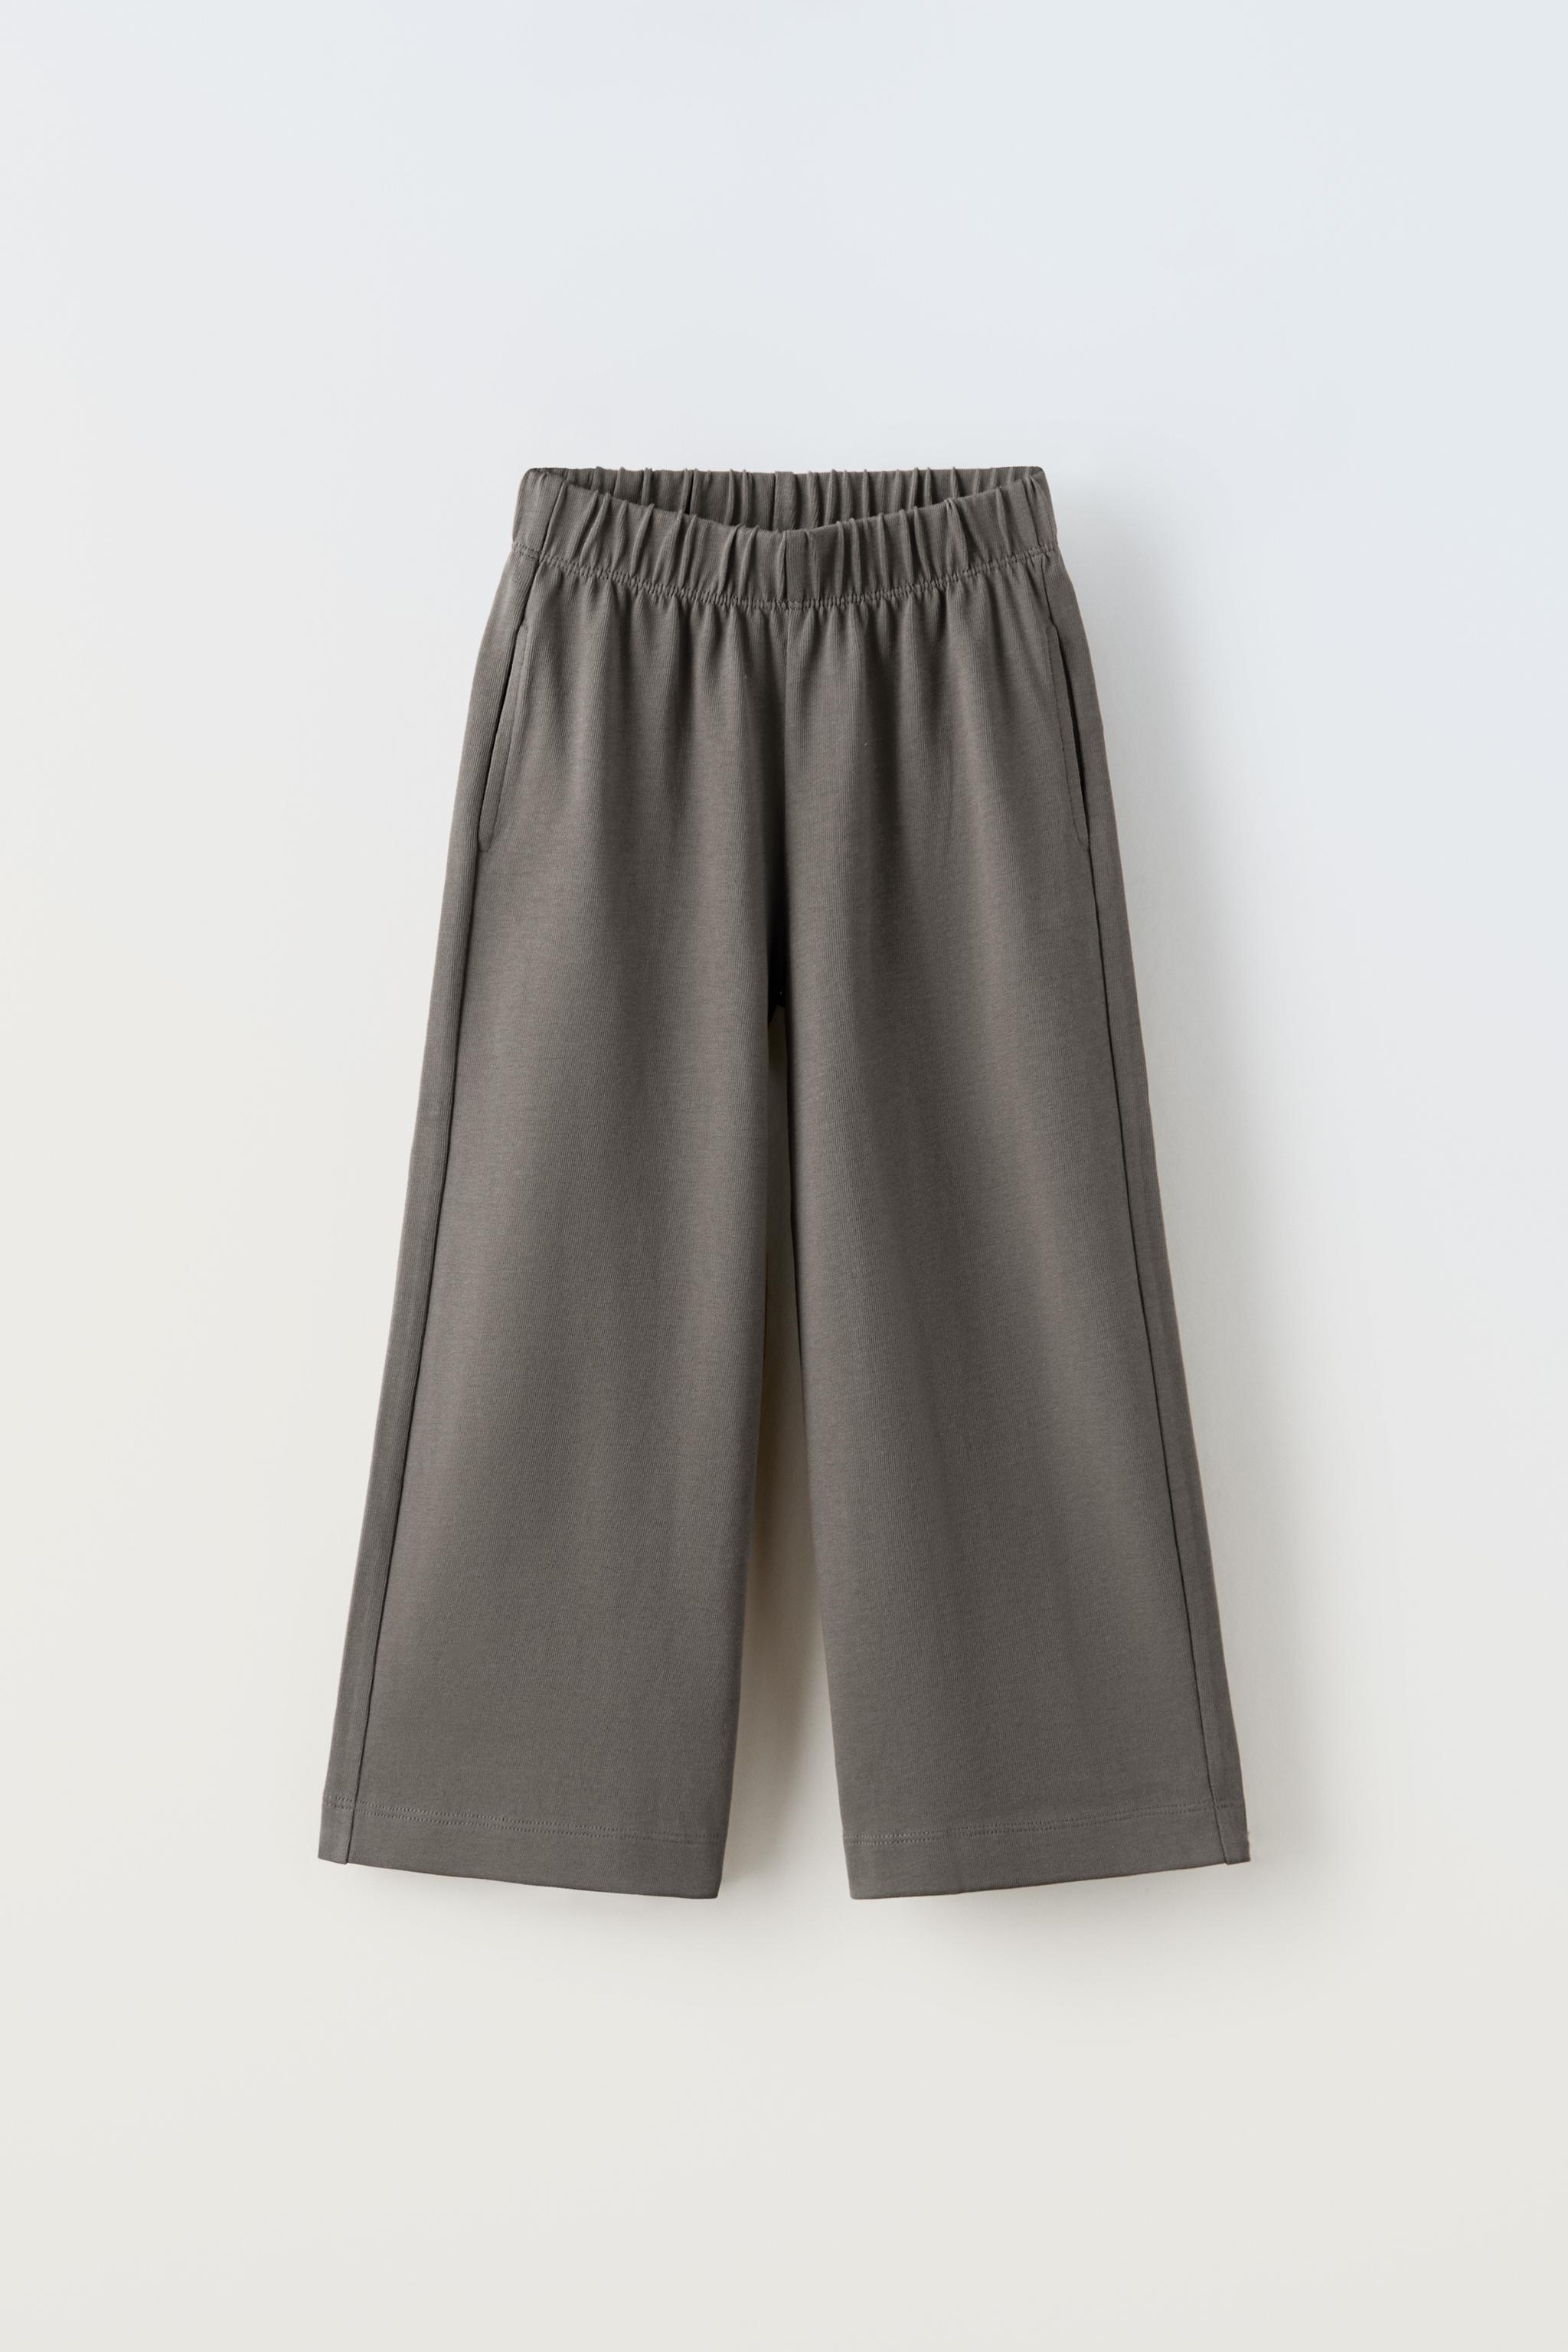 Zara pants set small and medium16500 (NO STRETCH) Riverisland